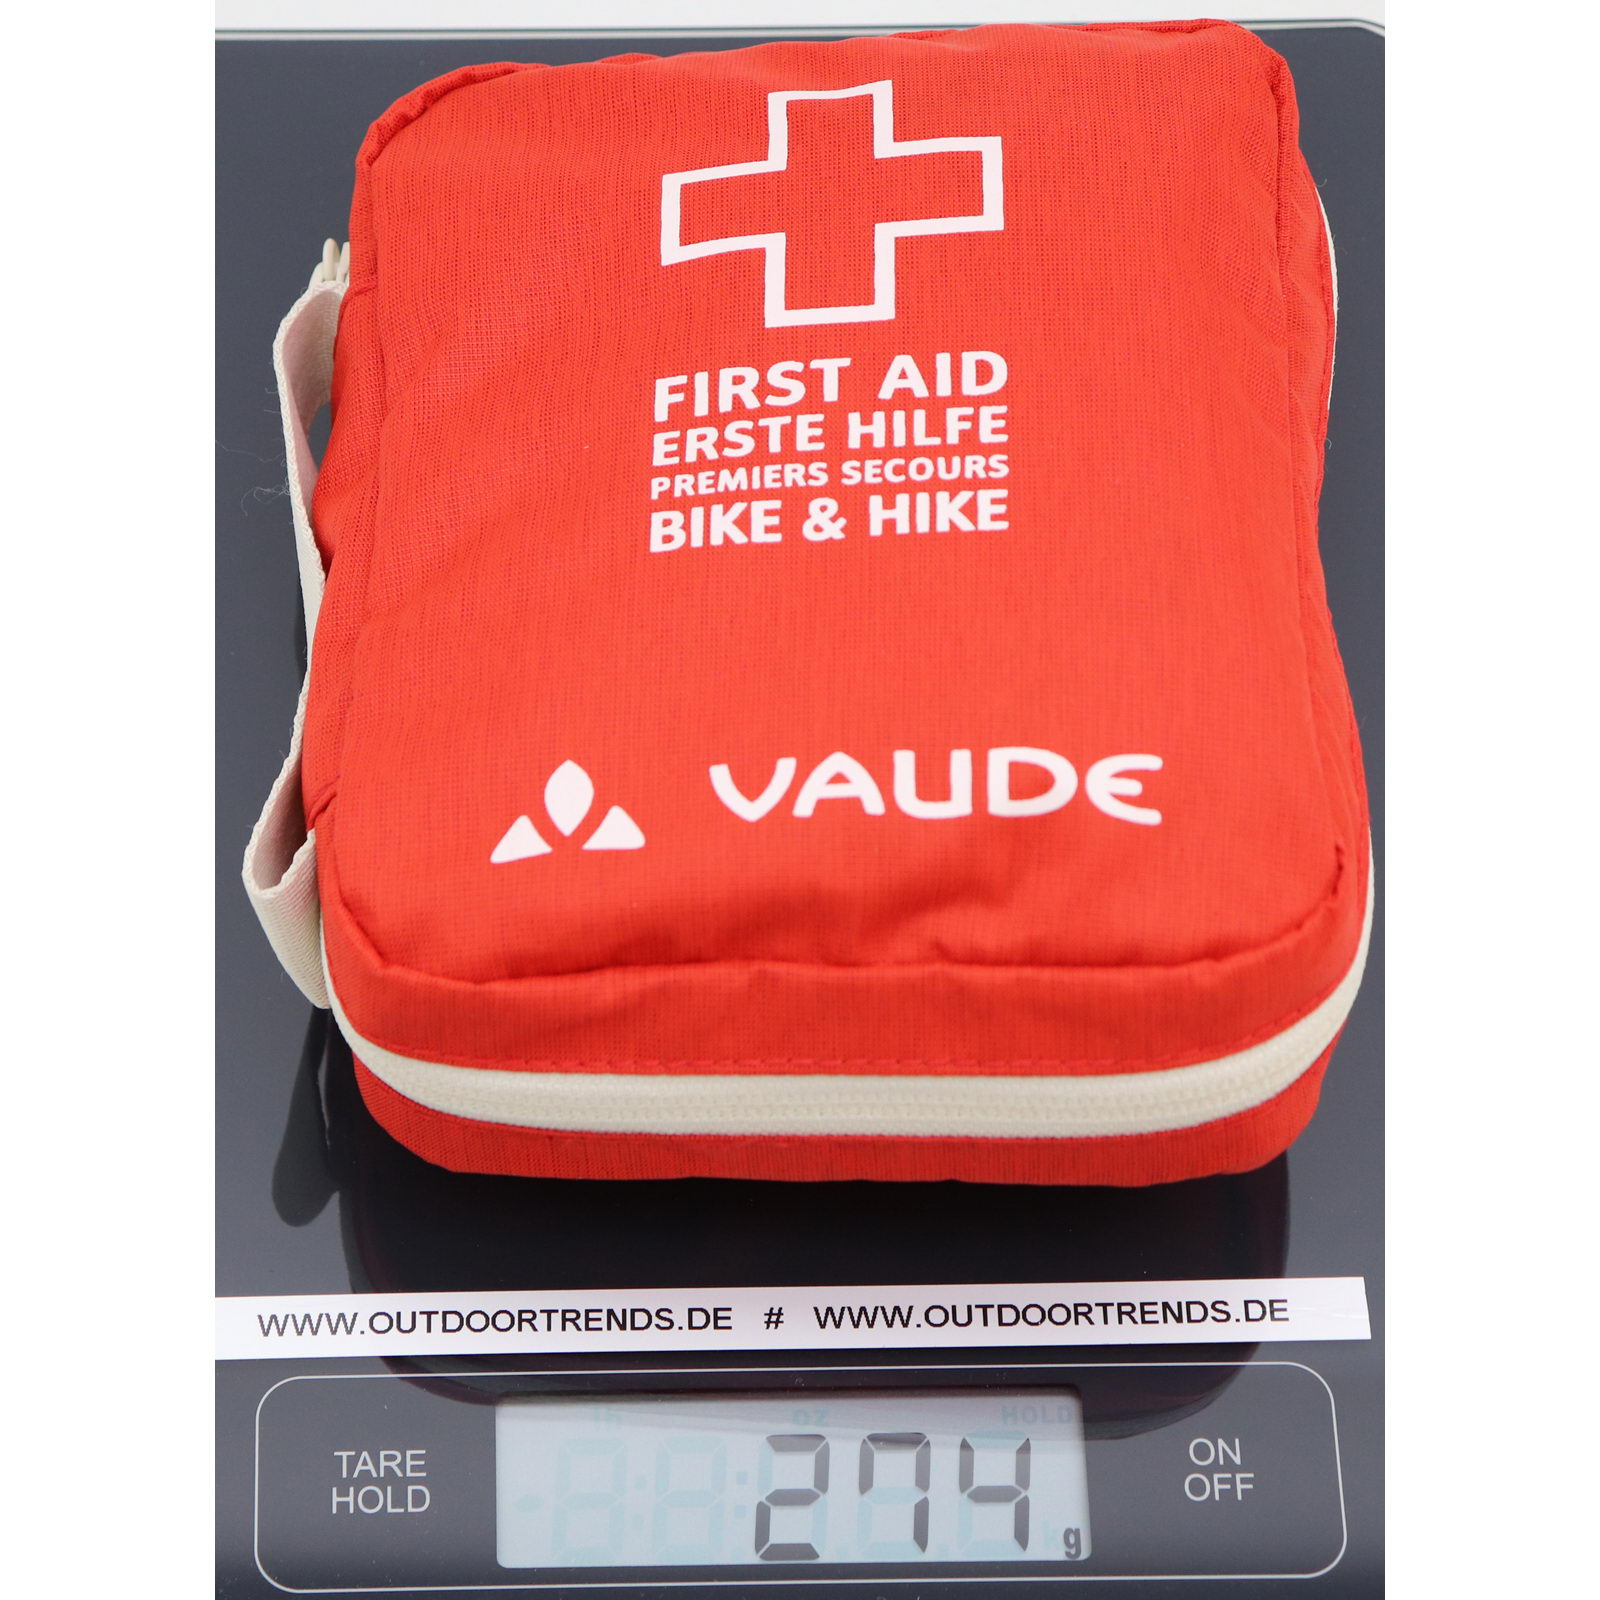 deuter First Aid Kit Erste-Hilfe-Set